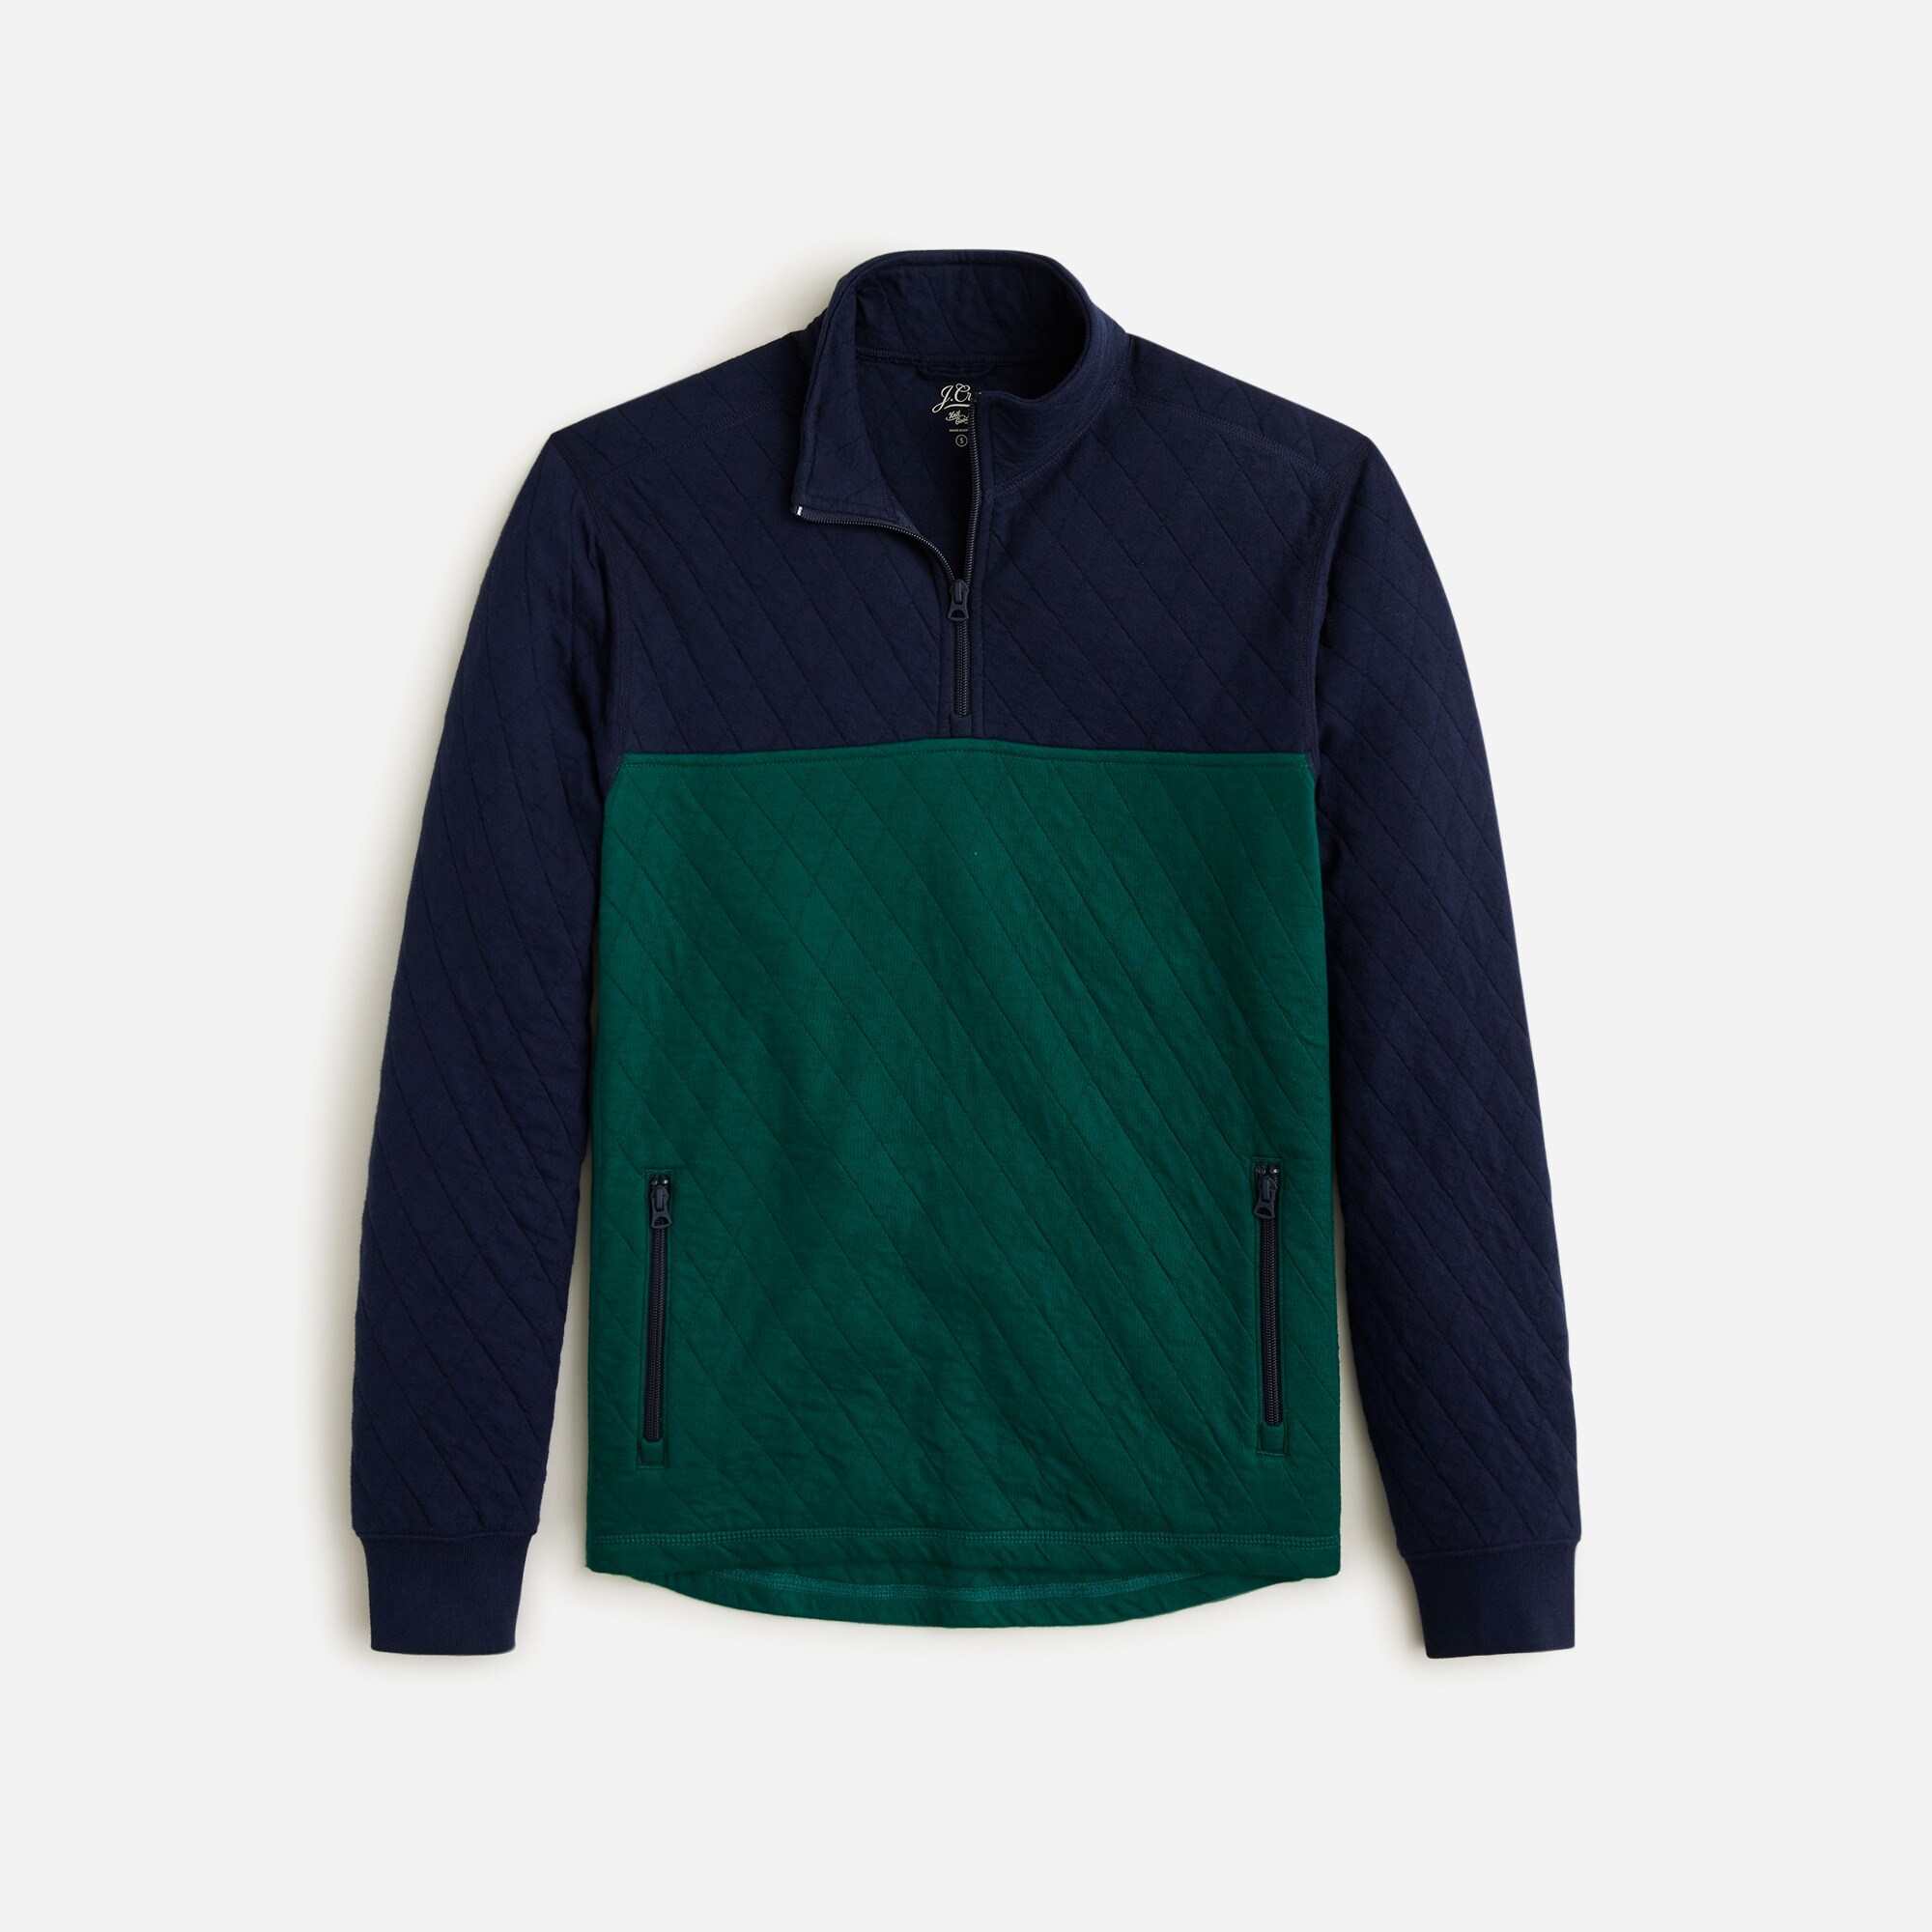  Quilted half-zip pullover in colorblock